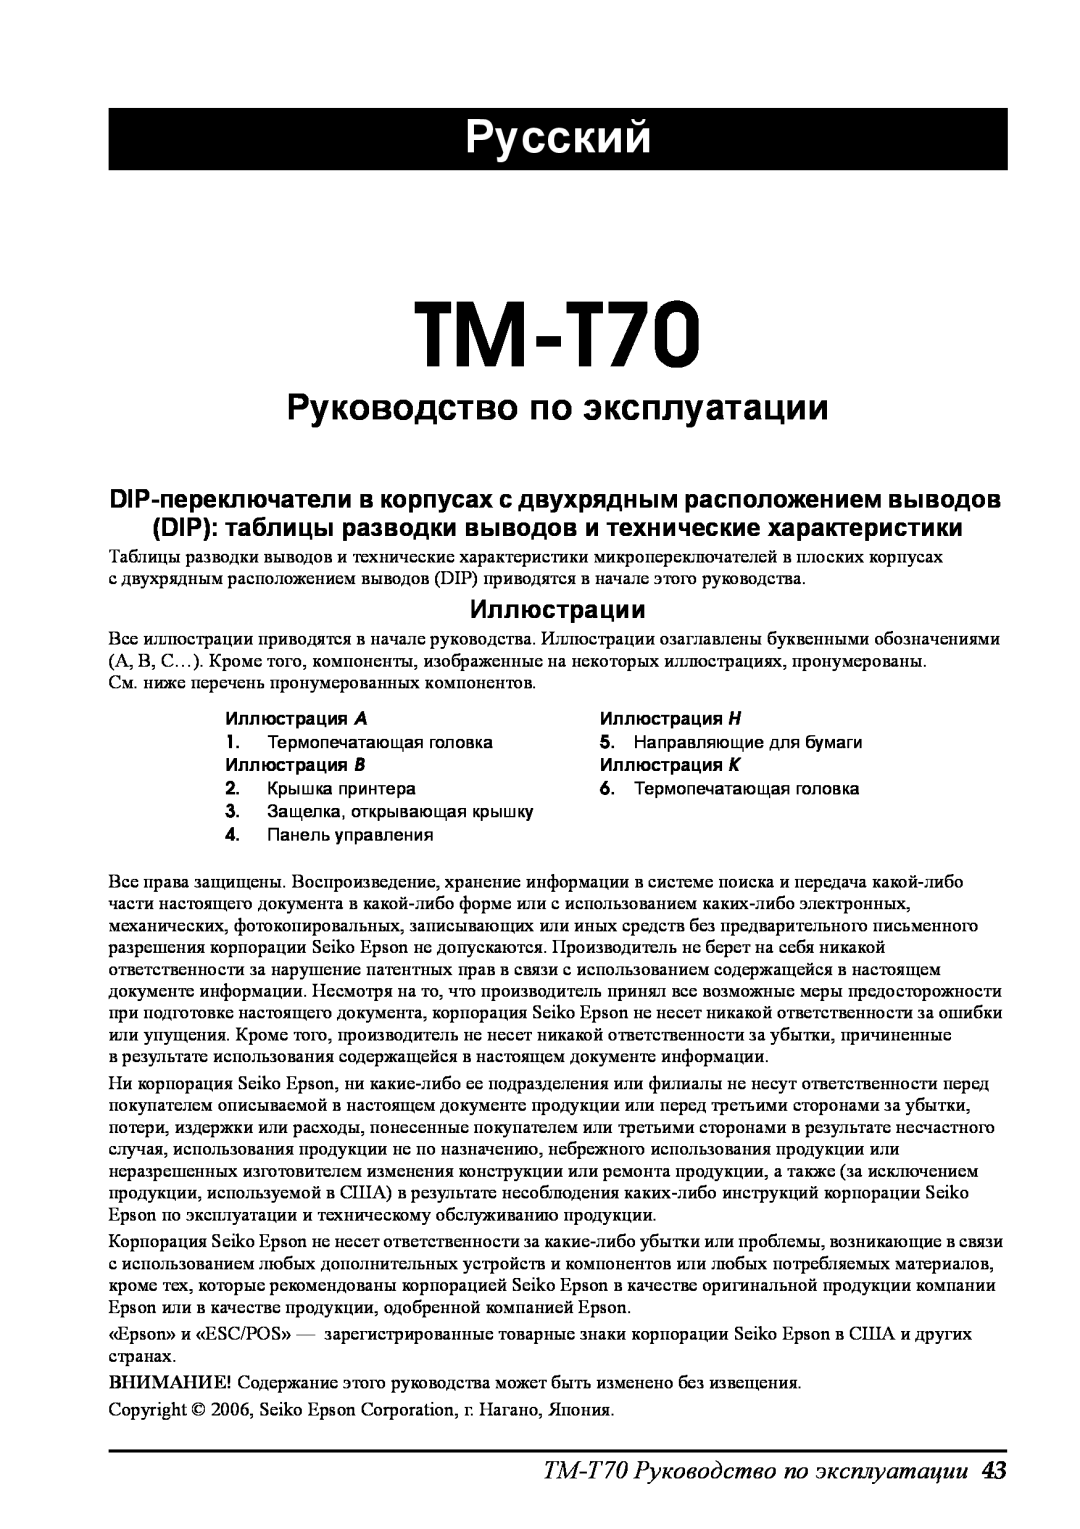 Seiko Group user manual Иллюстрации, TM-T70 Руководство по эксплуатации, Русский 